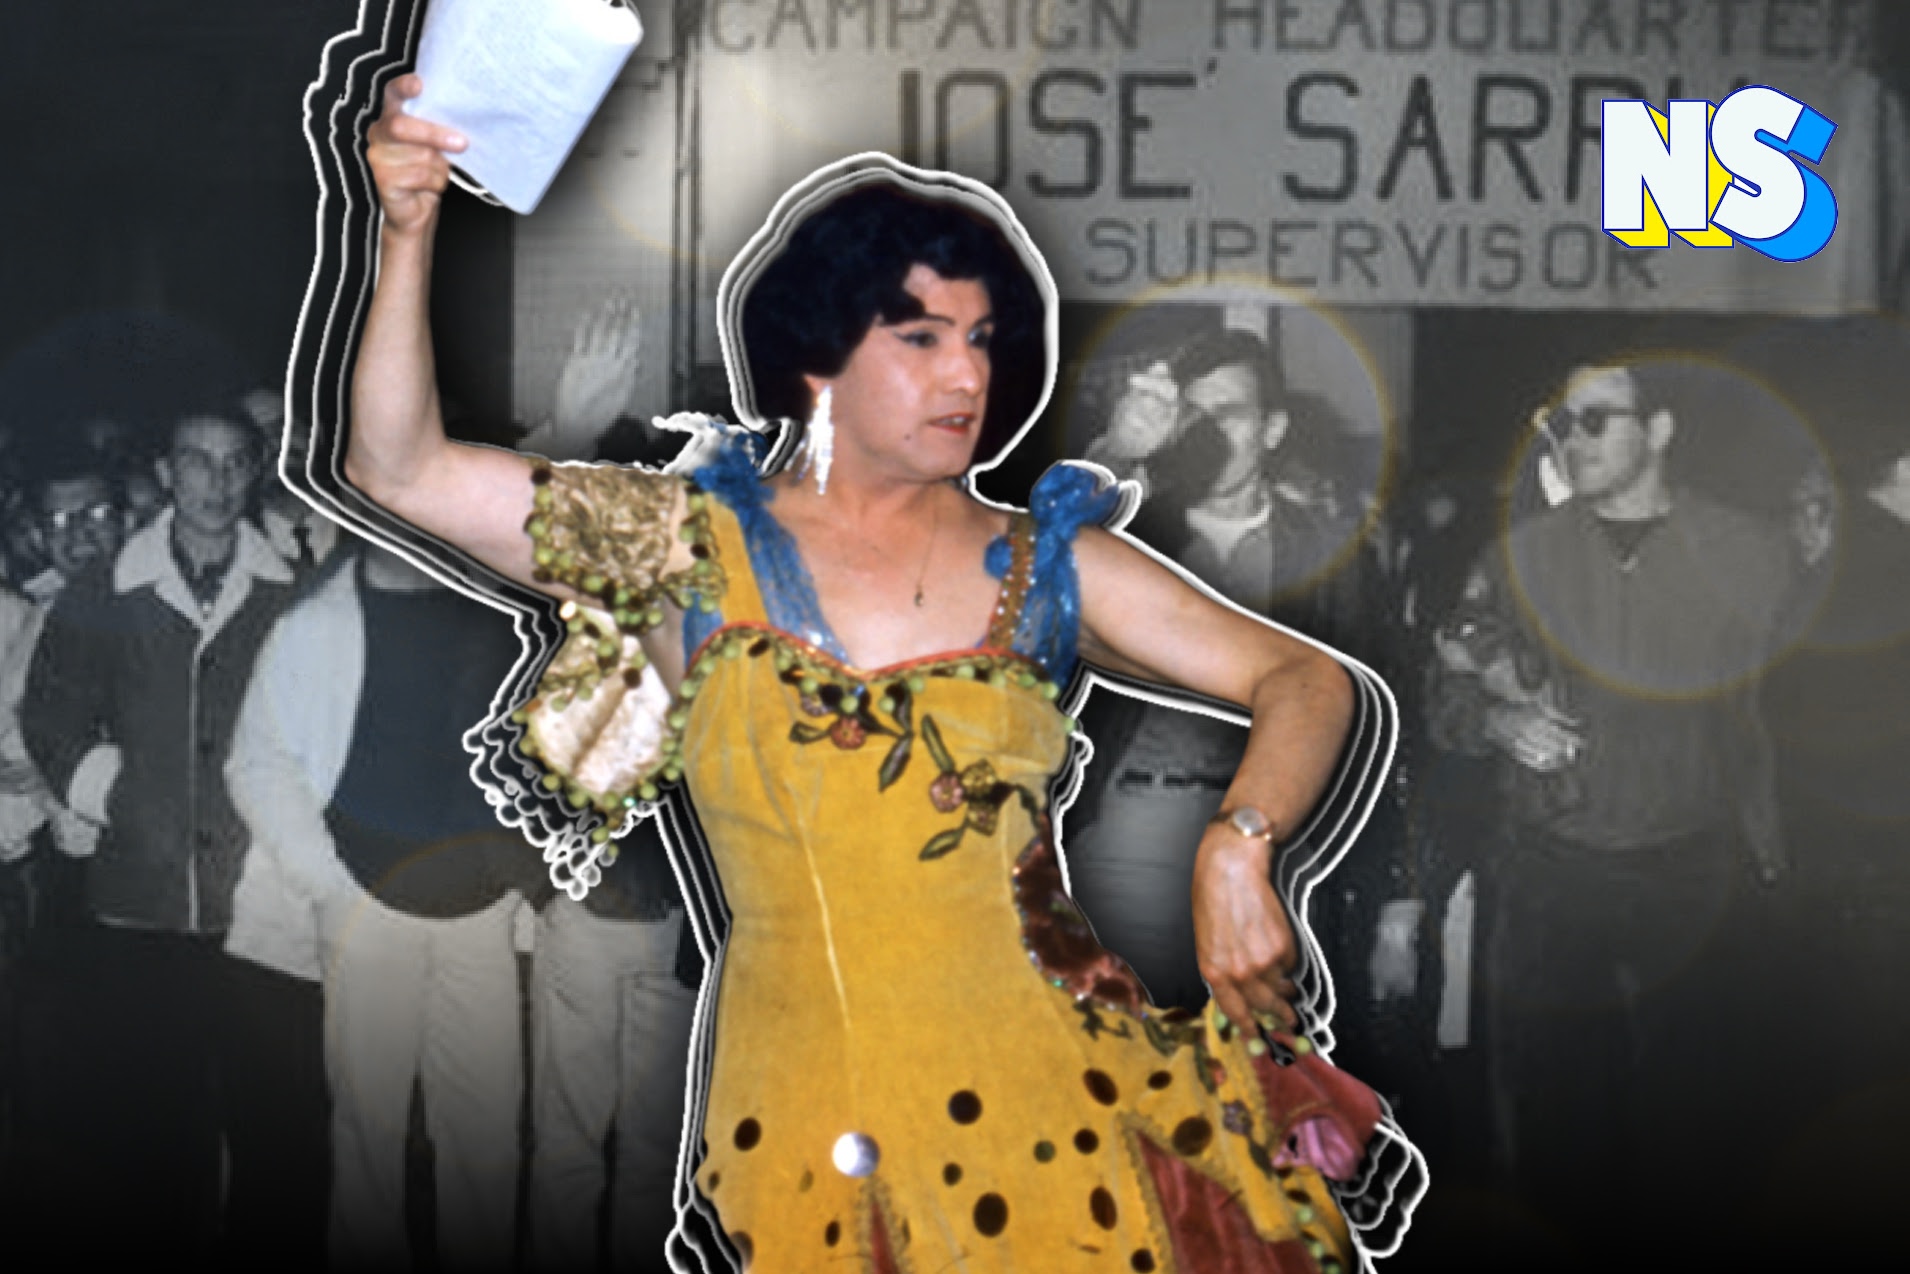 José Sarria, the Latino That Changed the Drag Scene